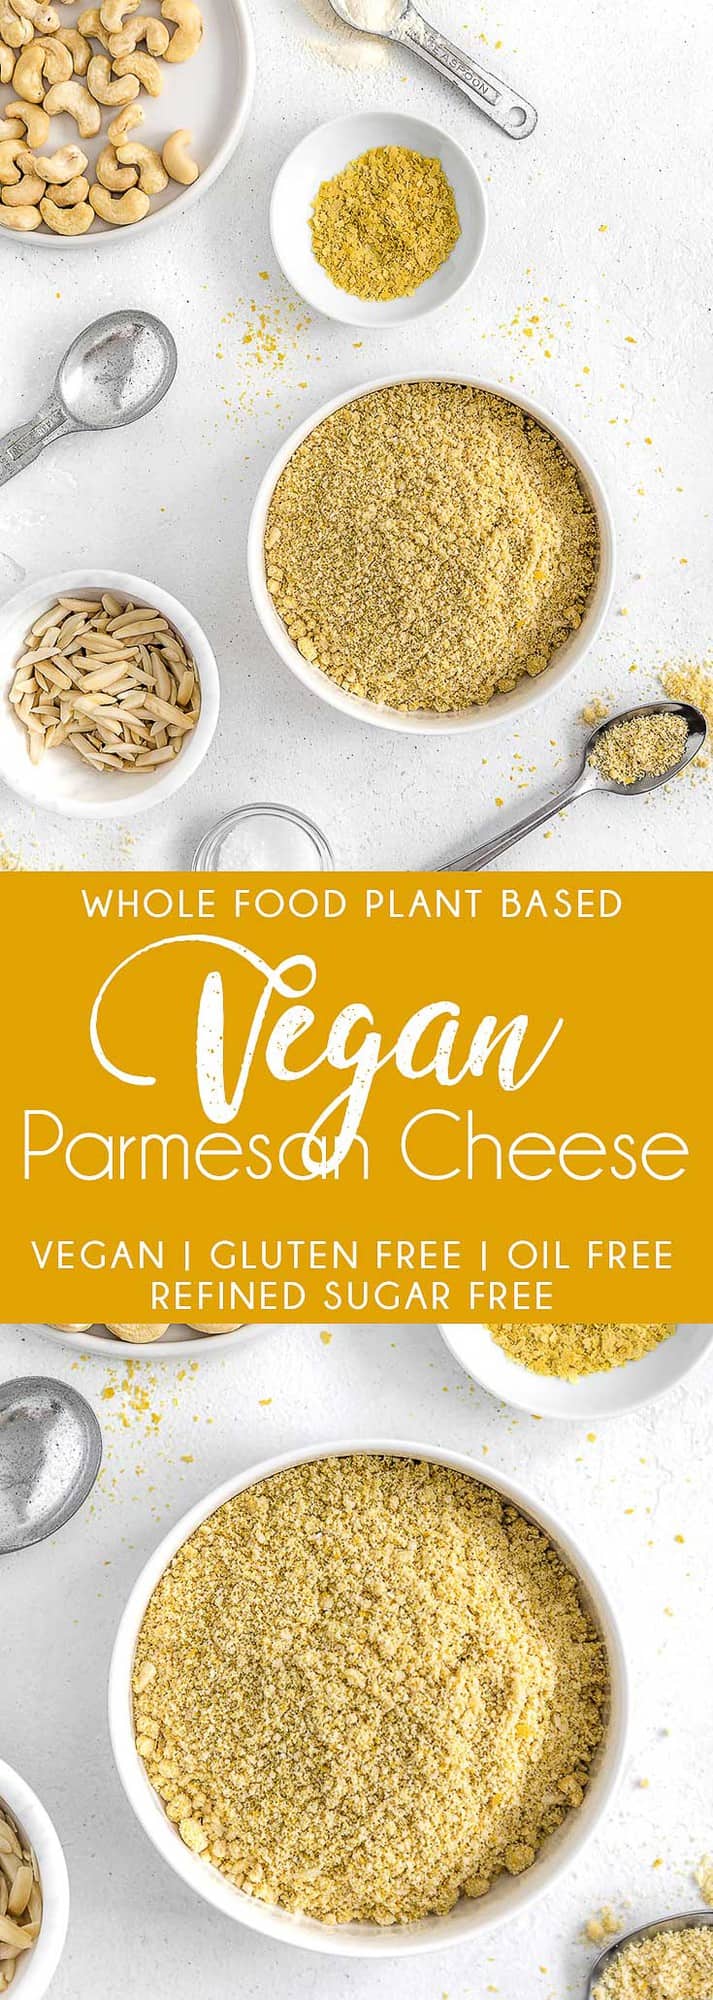 Vegan Parmesan Cheese, vegan cheese, vegan Parmesan, plant based cheese, plant based, vegan, vegetarian, whole food plant based, gluten free, recipe, wfpb, healthy, healthy vegan, oil free, no refined sugar, no oil, refined sugar free, dairy free, condiment, vegan condiment